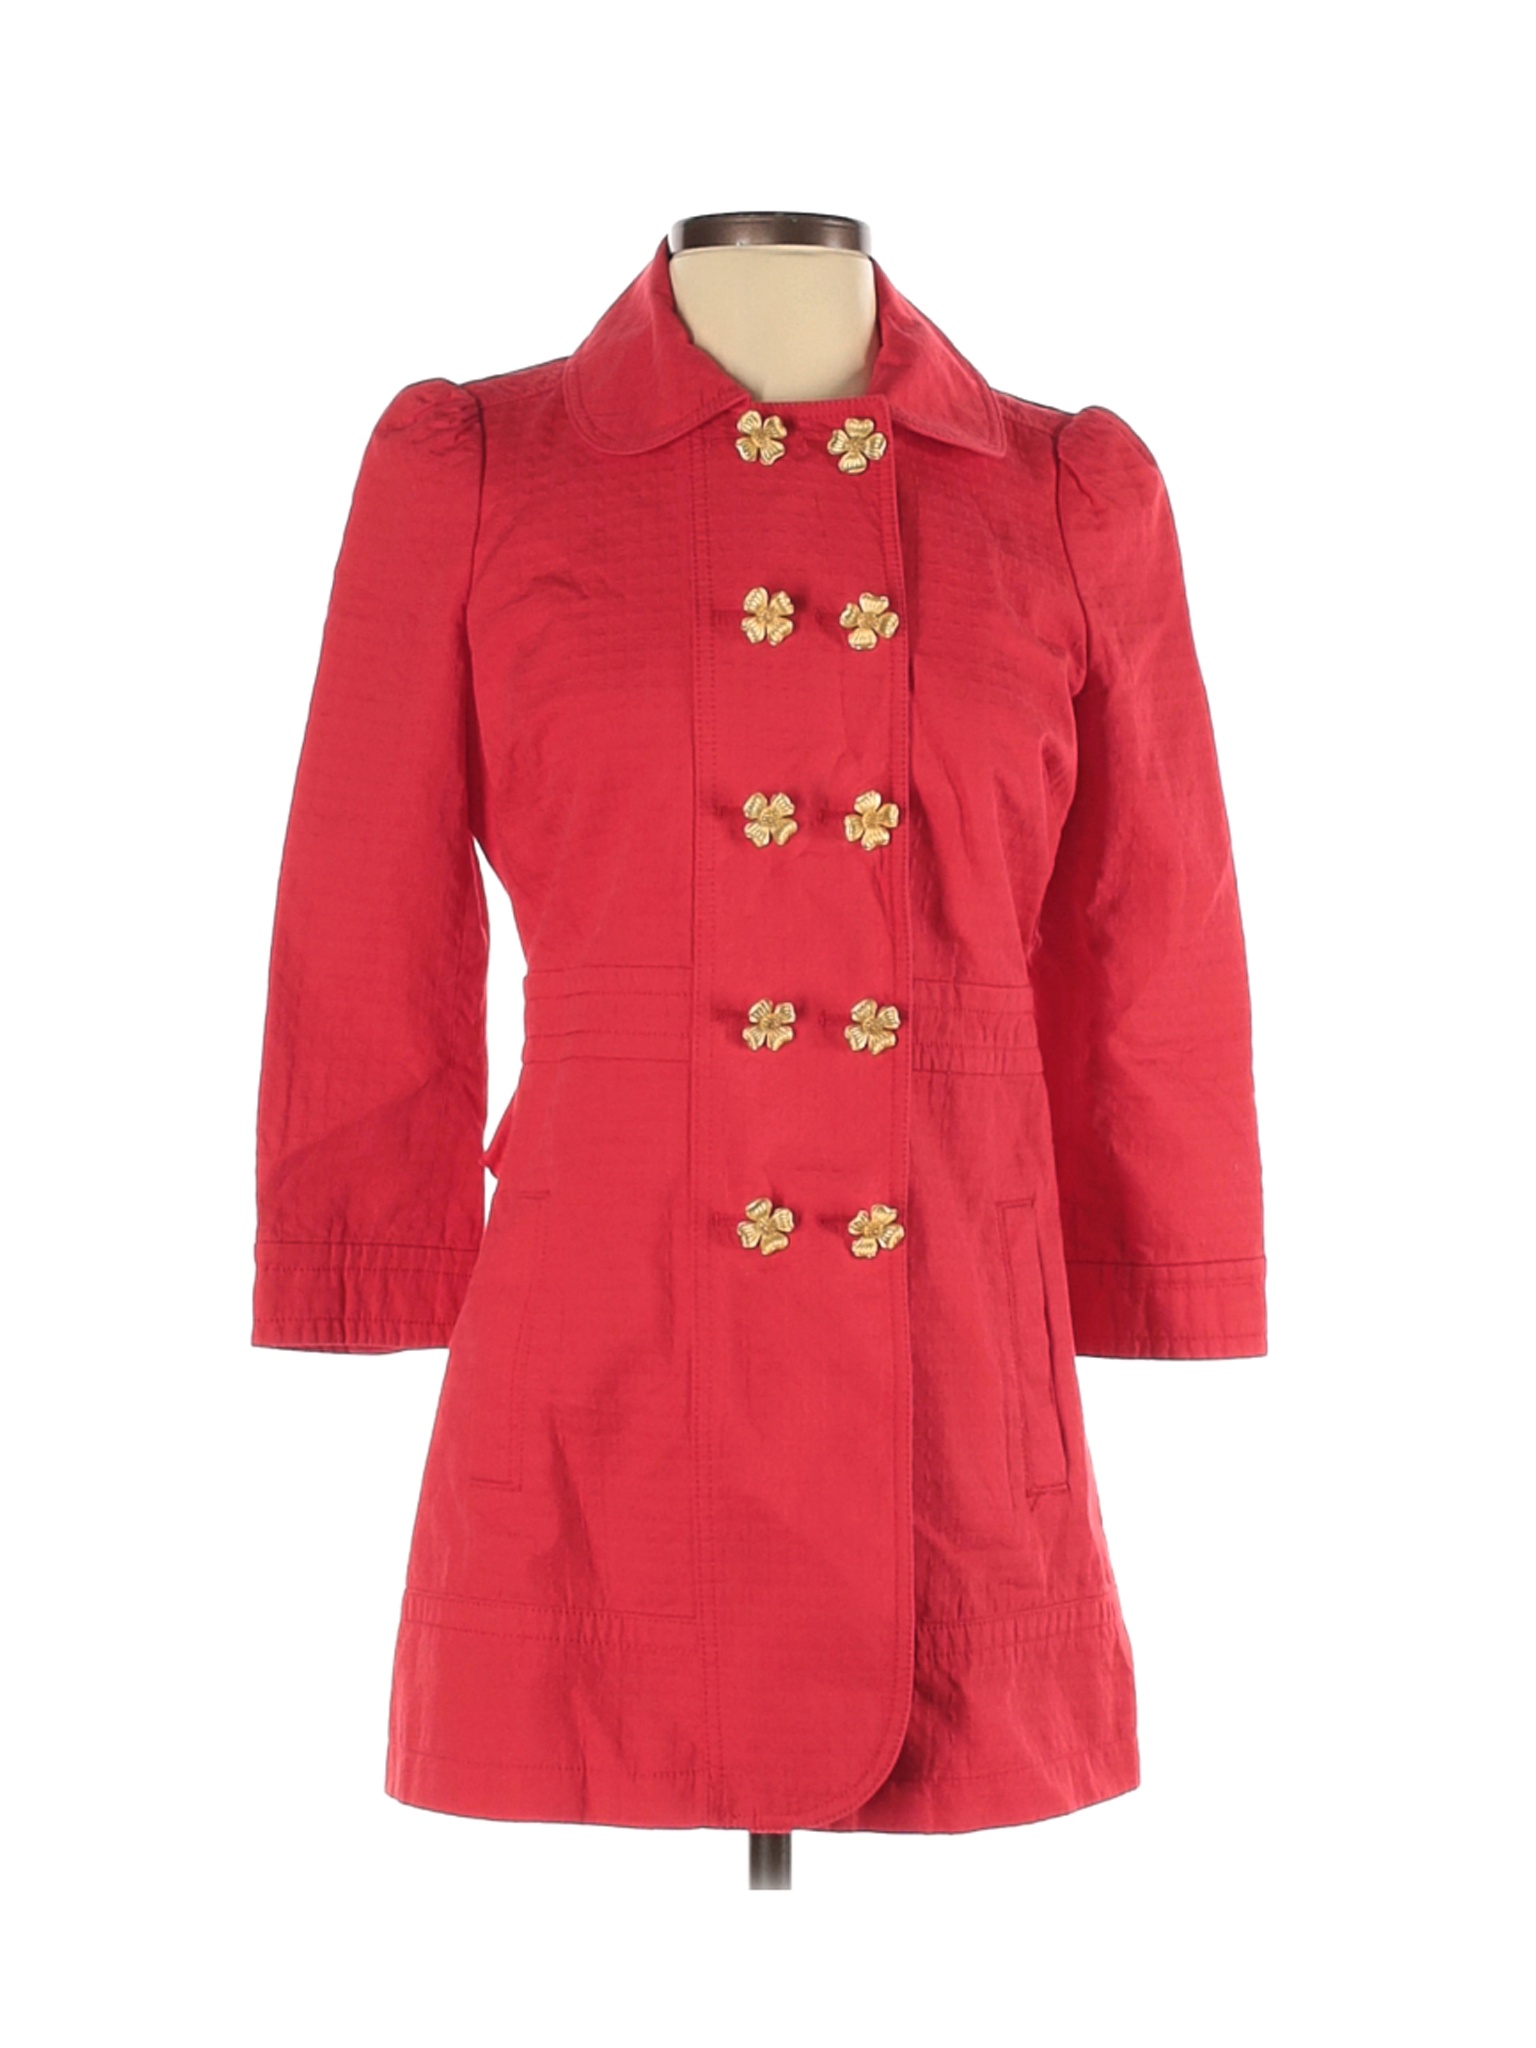 Juicy Couture Women Red Jacket S | eBay